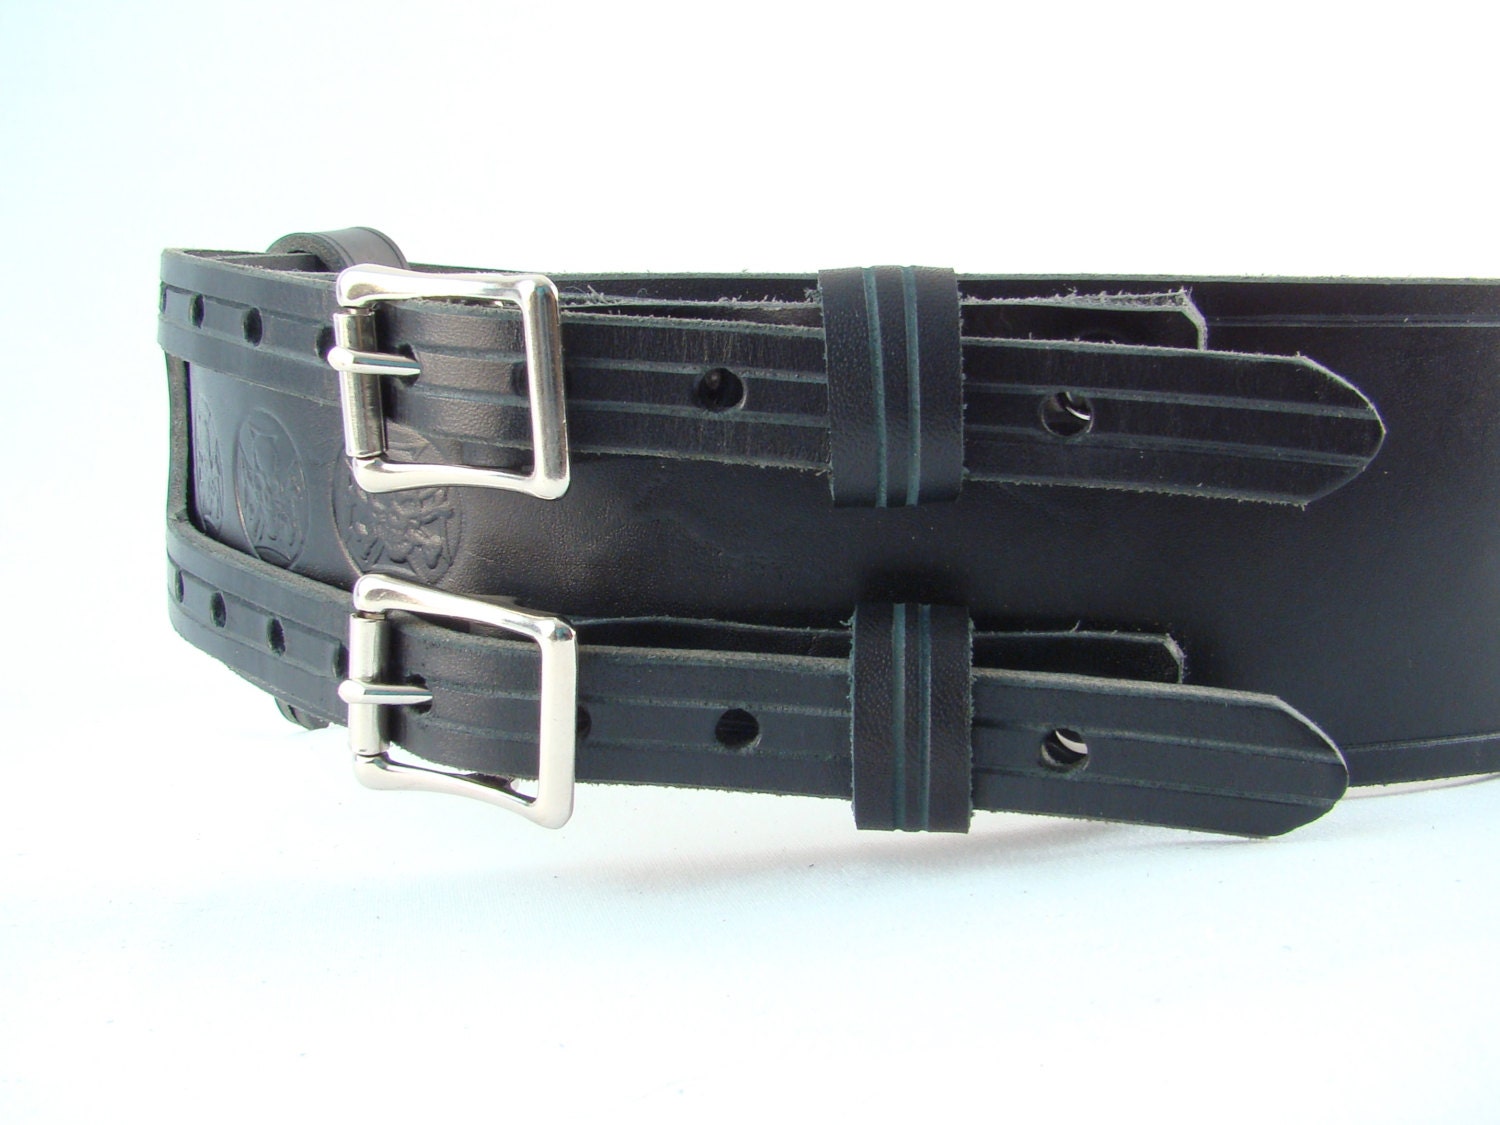 Kilt Belt Double Buckle Belt Black Leather Belt D Ring Add